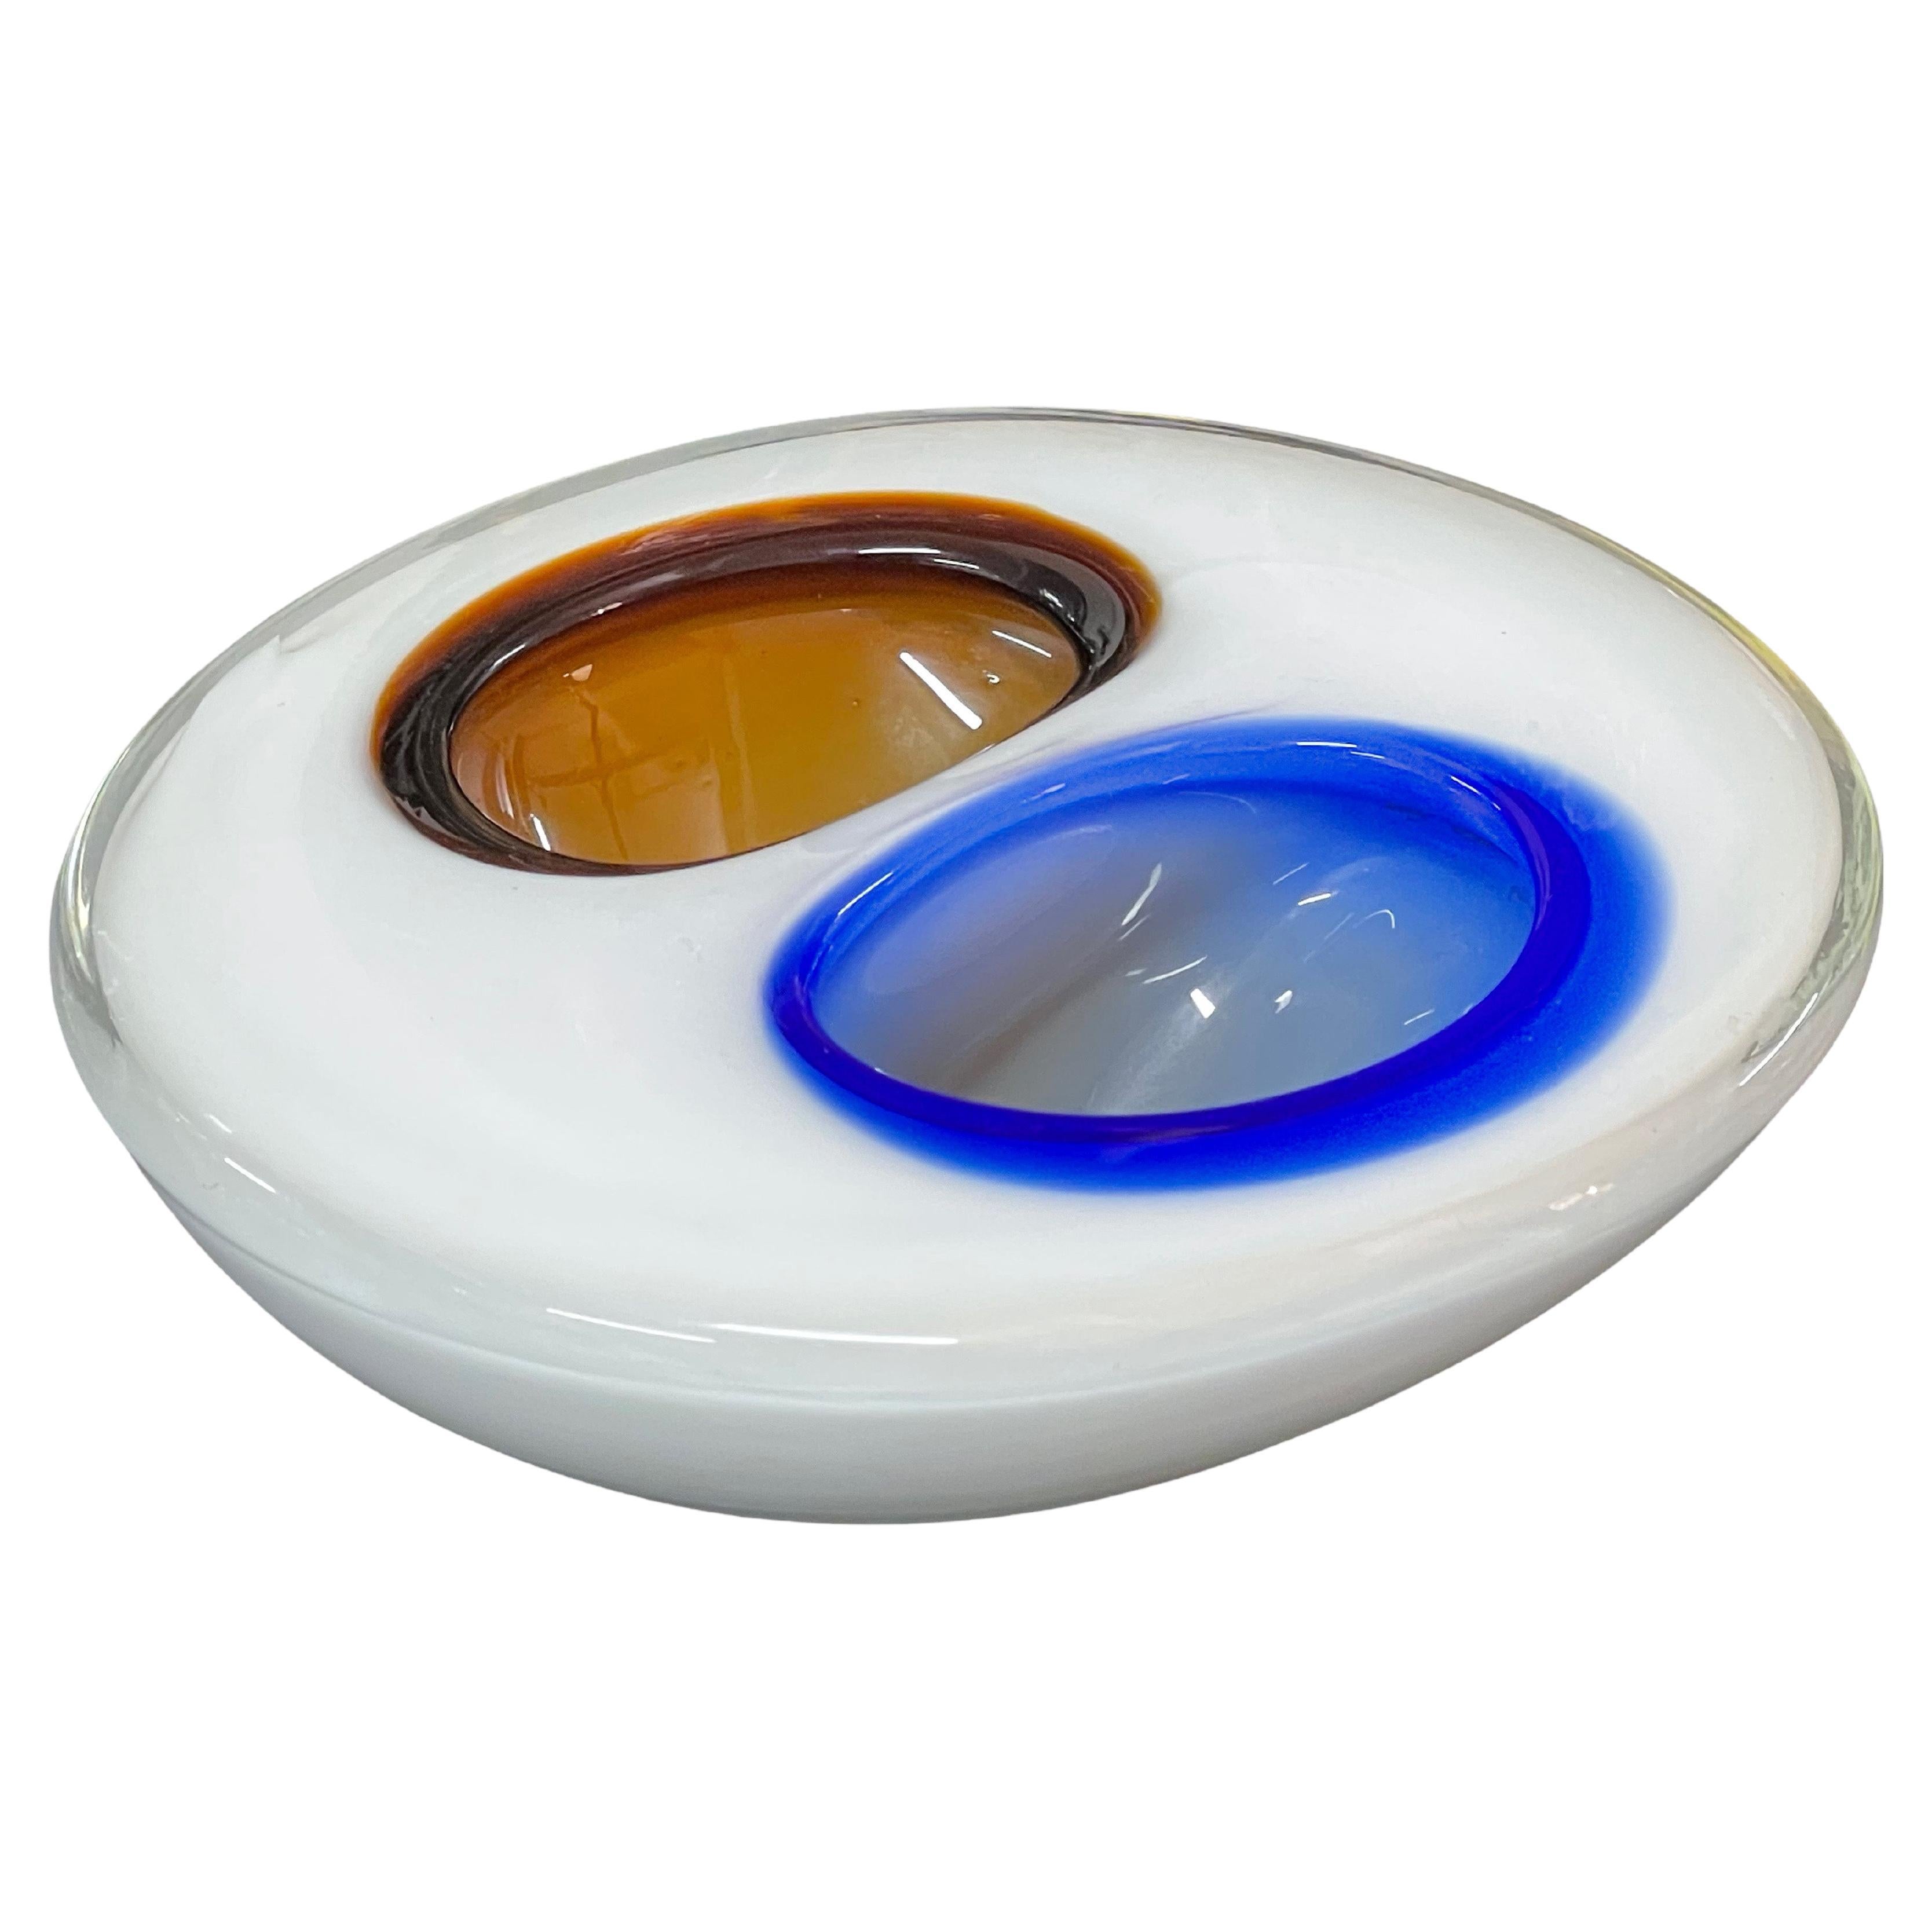 Flavio Poli White, Amber and Blue "Submerged" Murano Glass Italian Bowl, 1970s